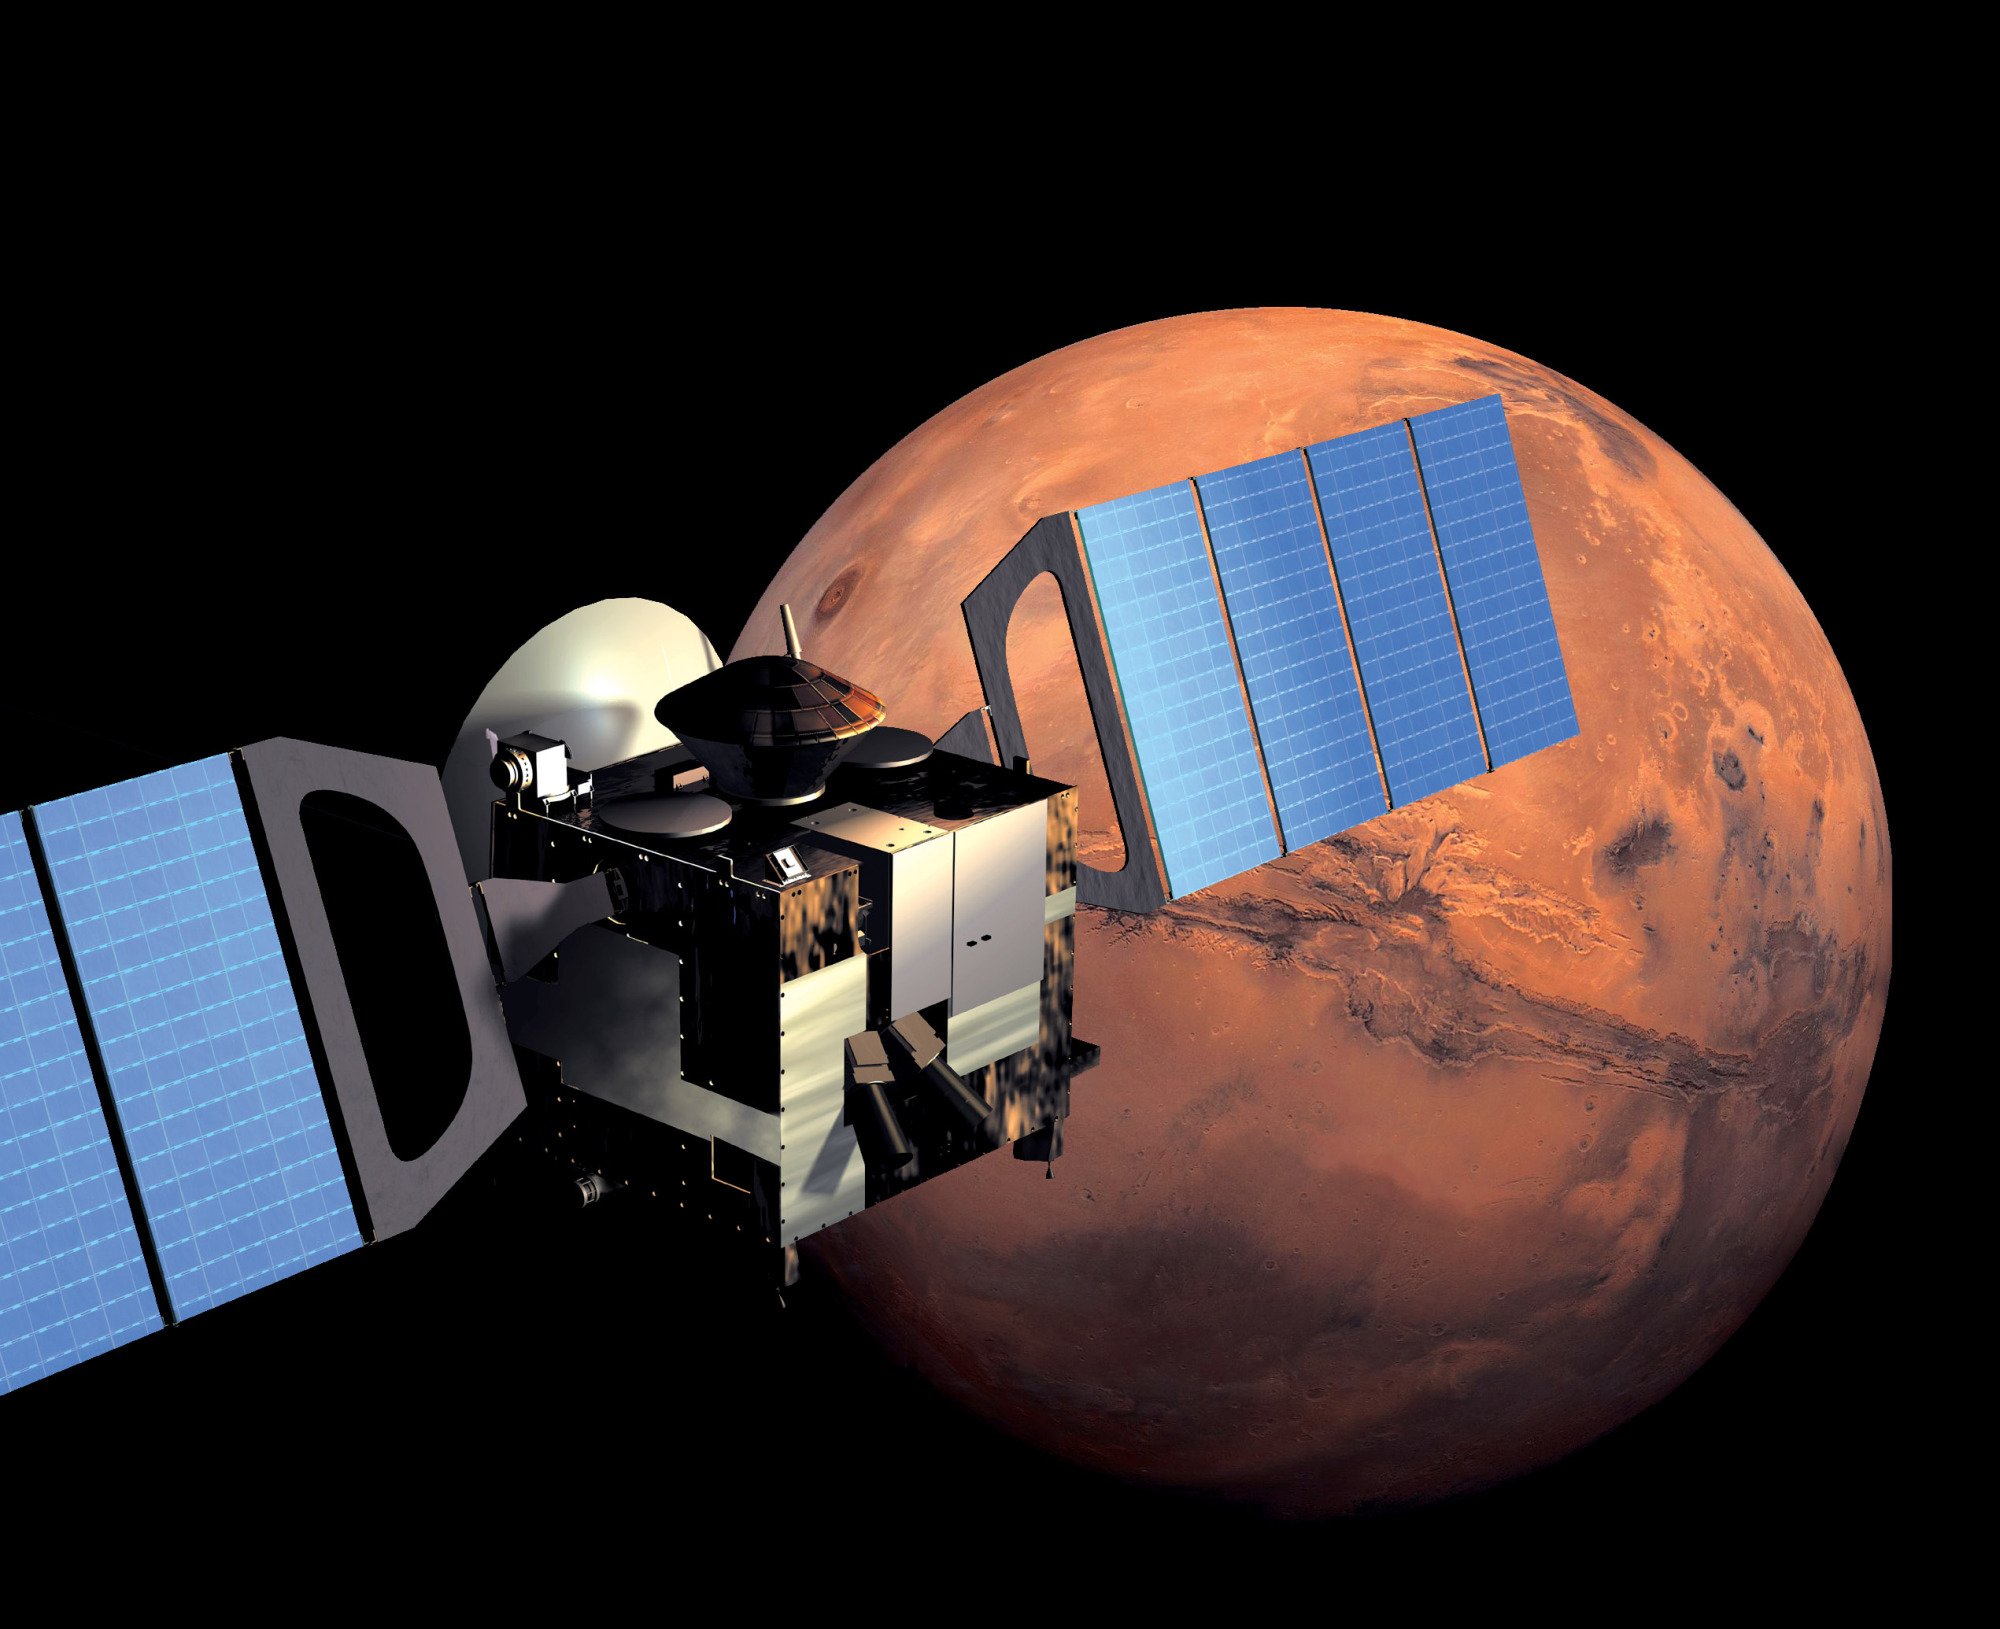 Mars Express spacecraft orbiting Mars